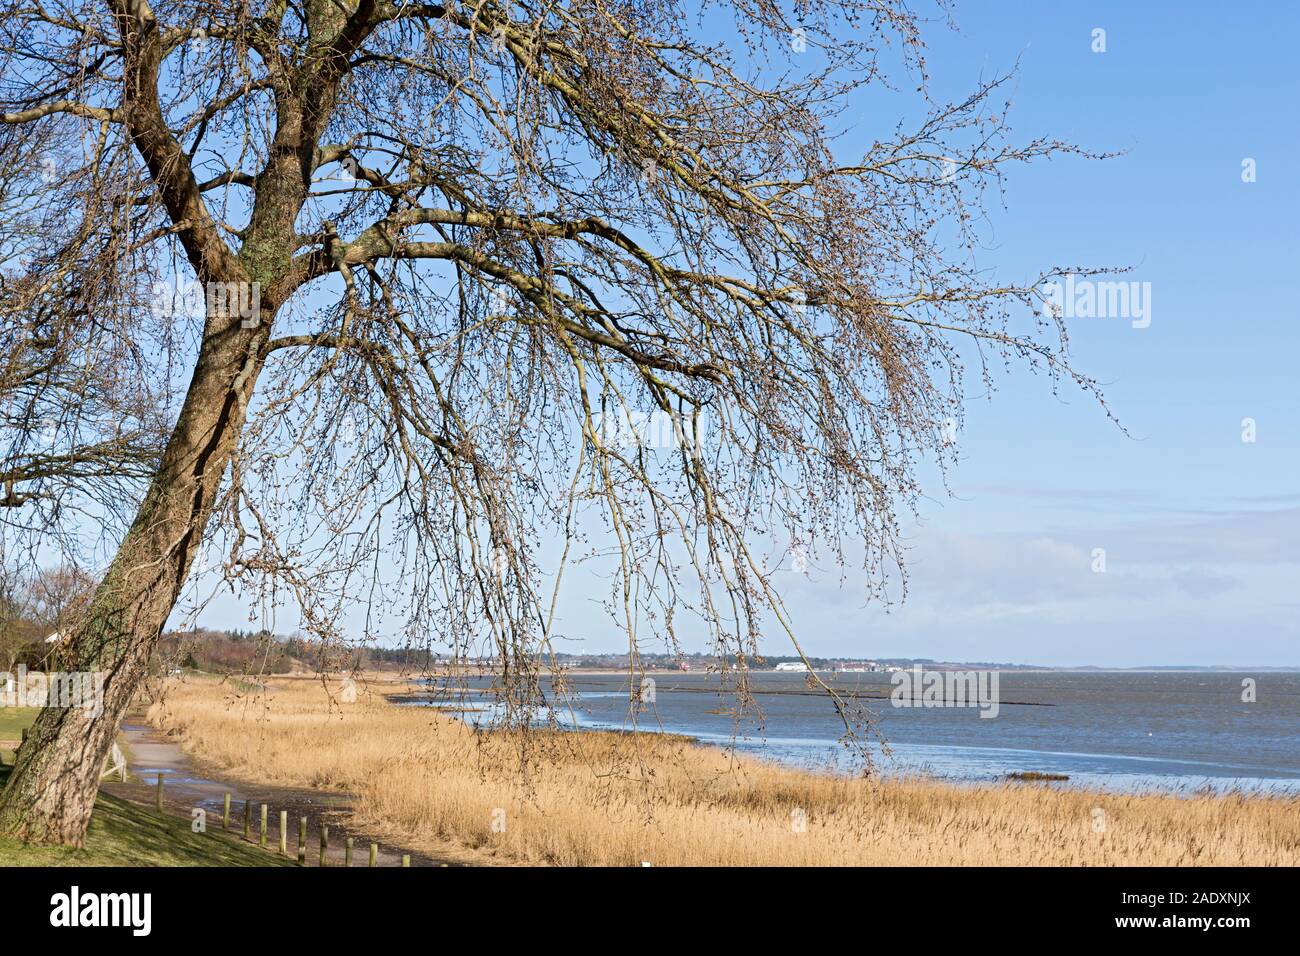 Keitum, Wattenmeer, Ufer, Schilf, Reetgras, Haeuser Stock Photo